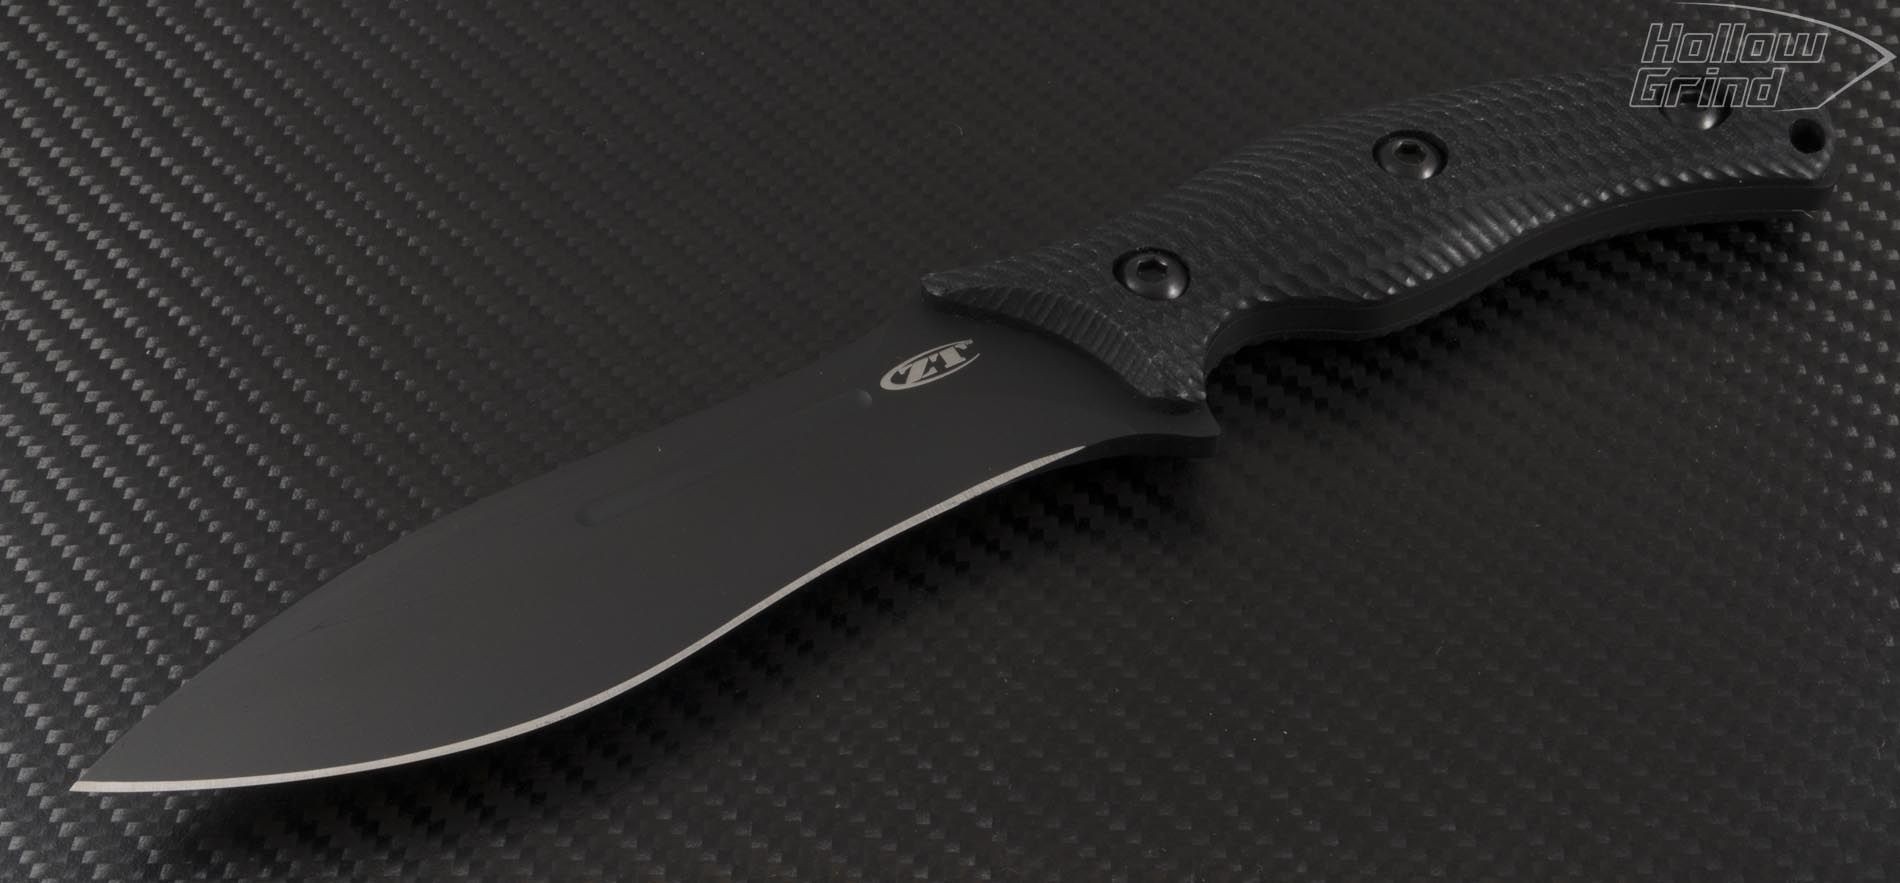 General 1900x883 metal weapon knife Pocket Knife